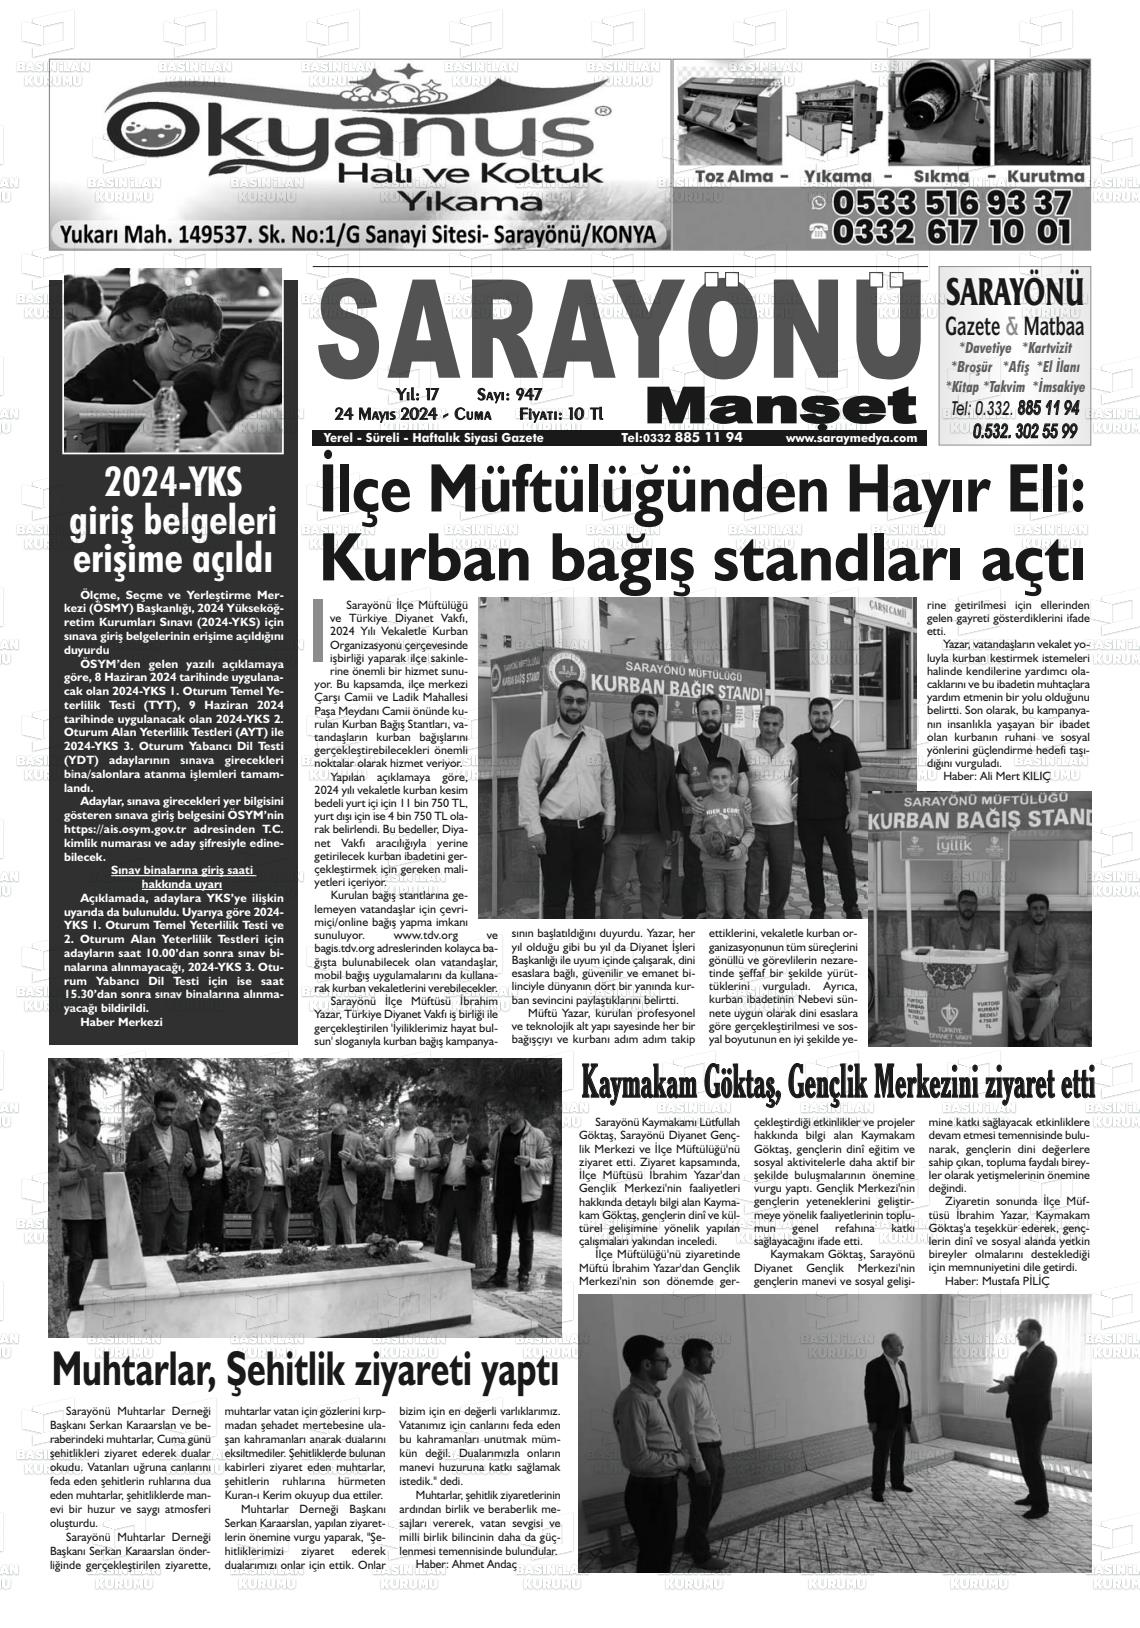 SARAYÖNÜ MANŞET Gazetesi